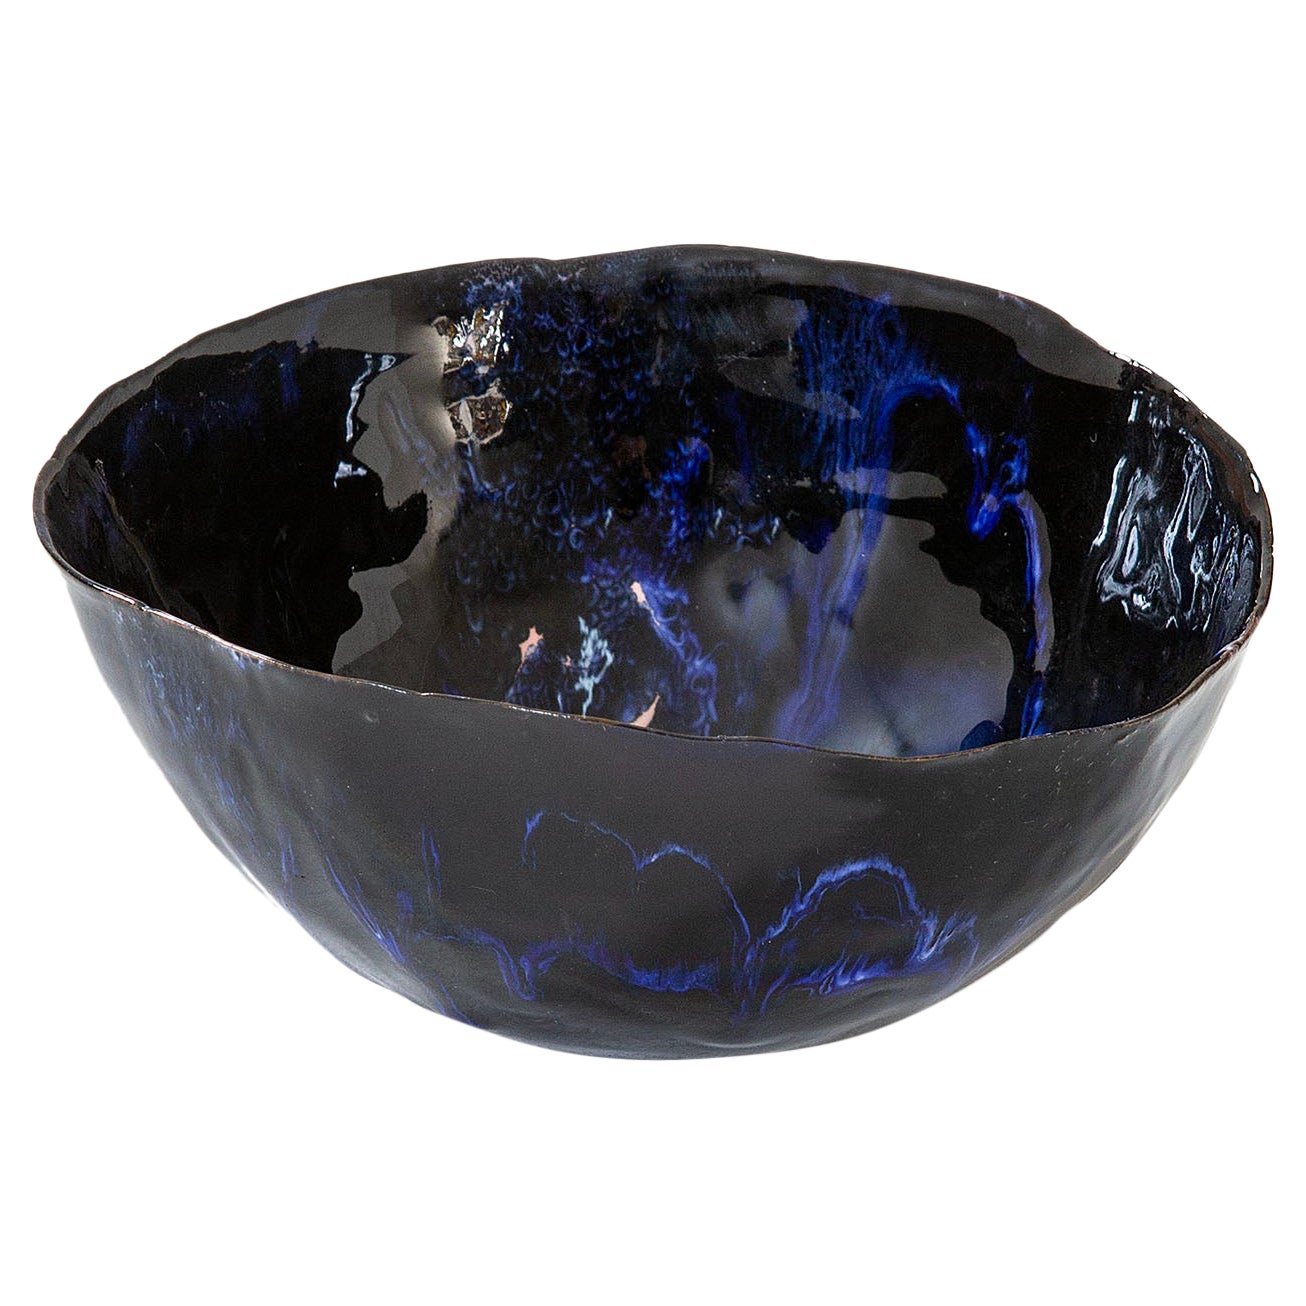 20th Century Fausto Melotti Decorative Bowl in Blue Enameled Ceramic, 60s For Sale